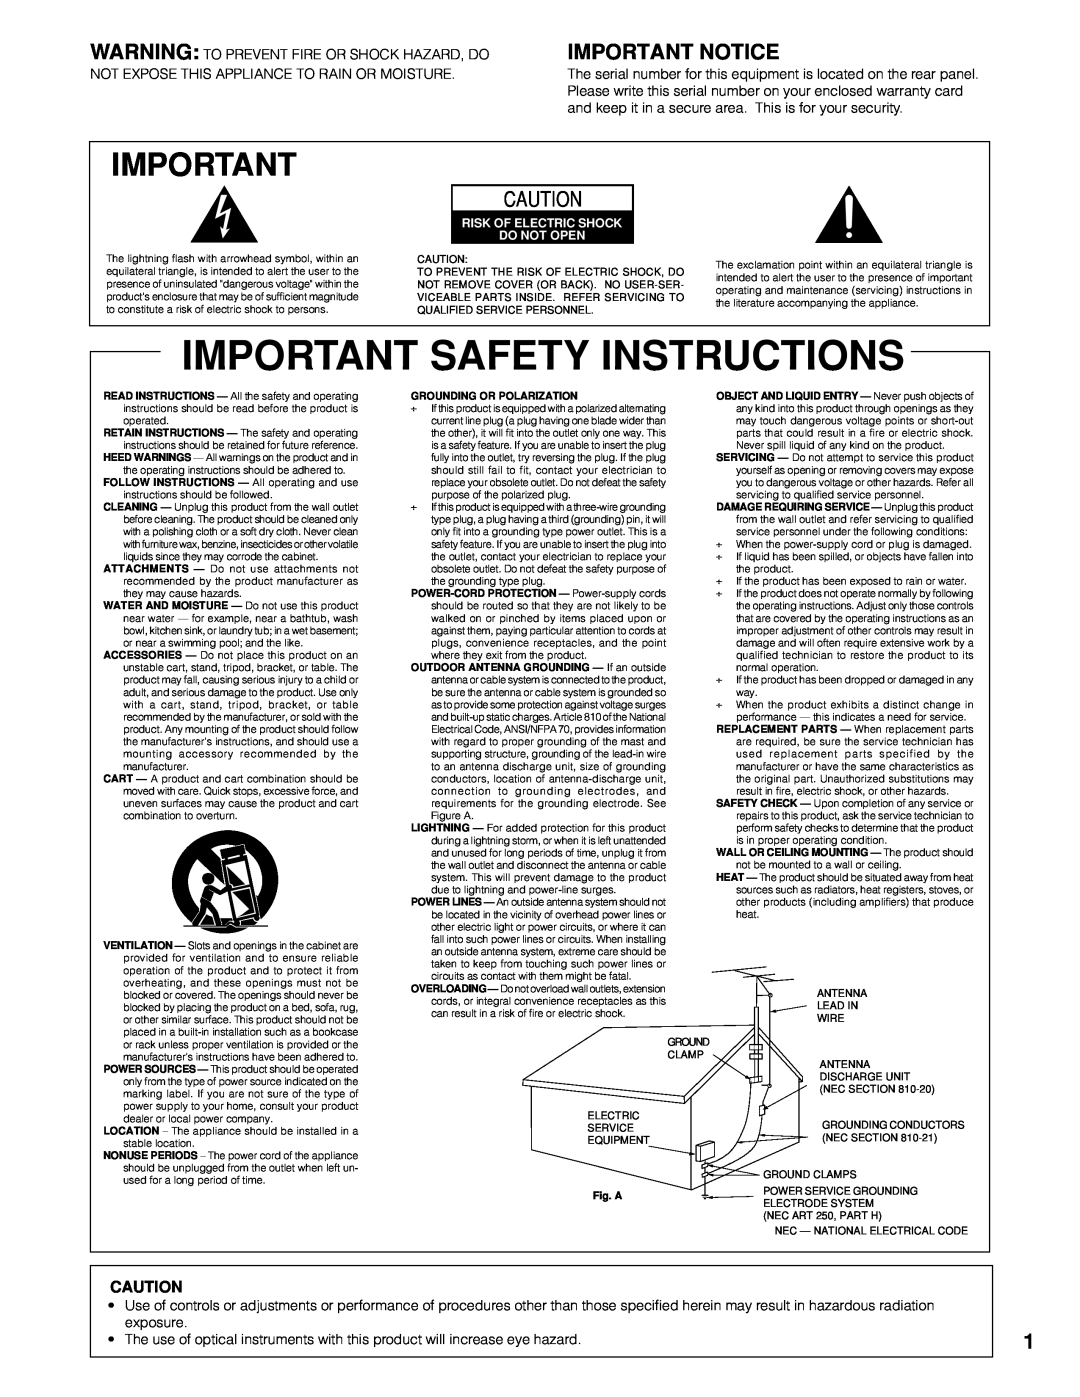 Marantz CC9100 manual Important Notice, Important Safety Instructions 